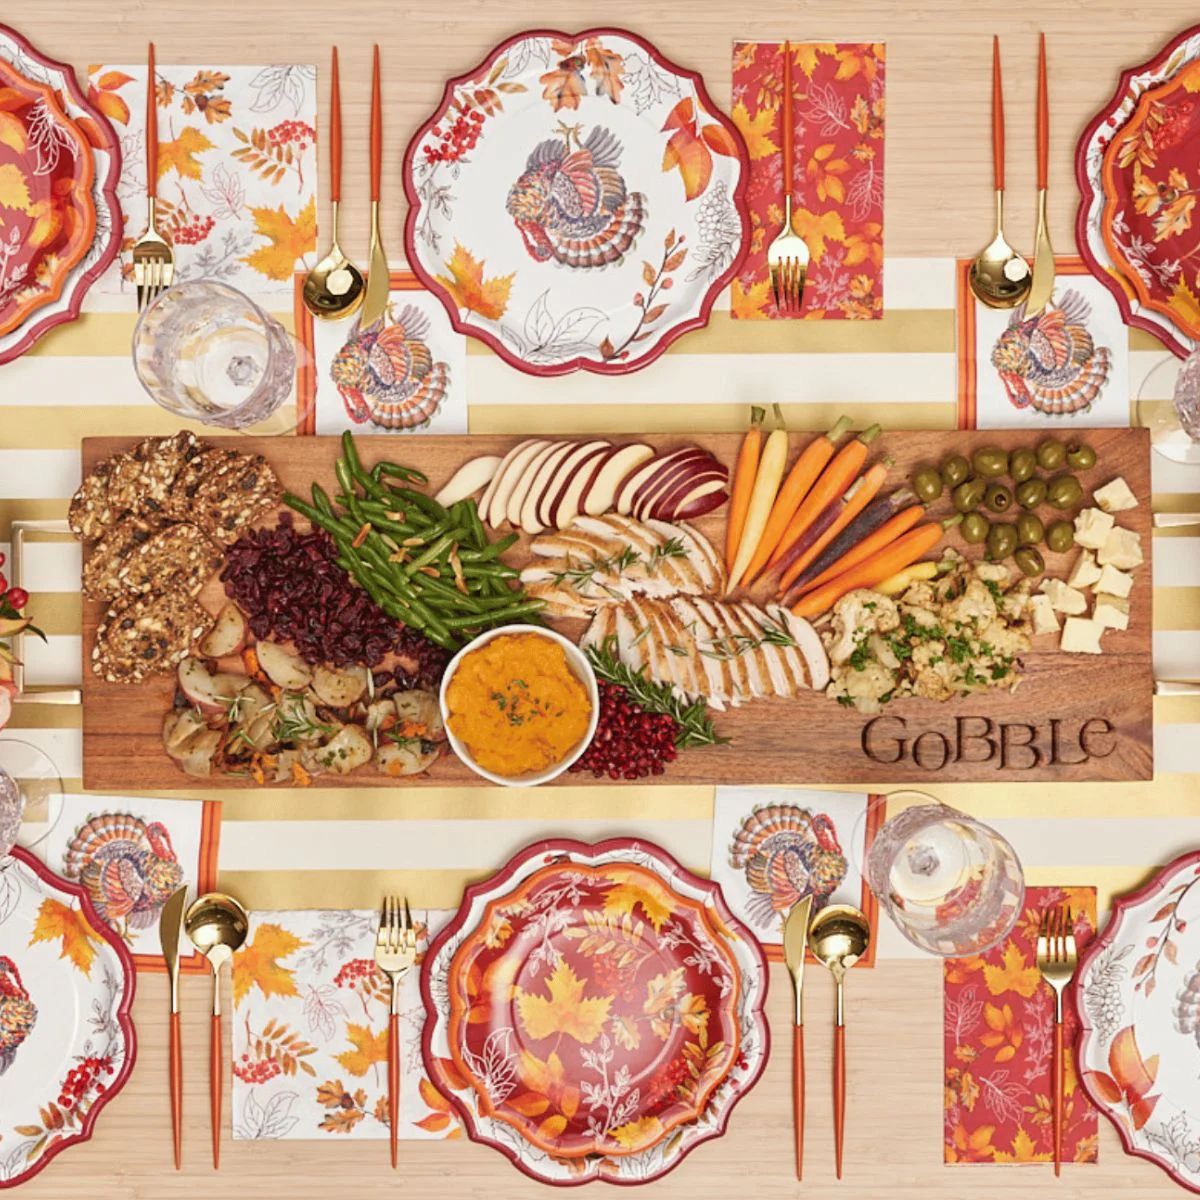 Thankful Gatherings Table Setting | Sophistiplate